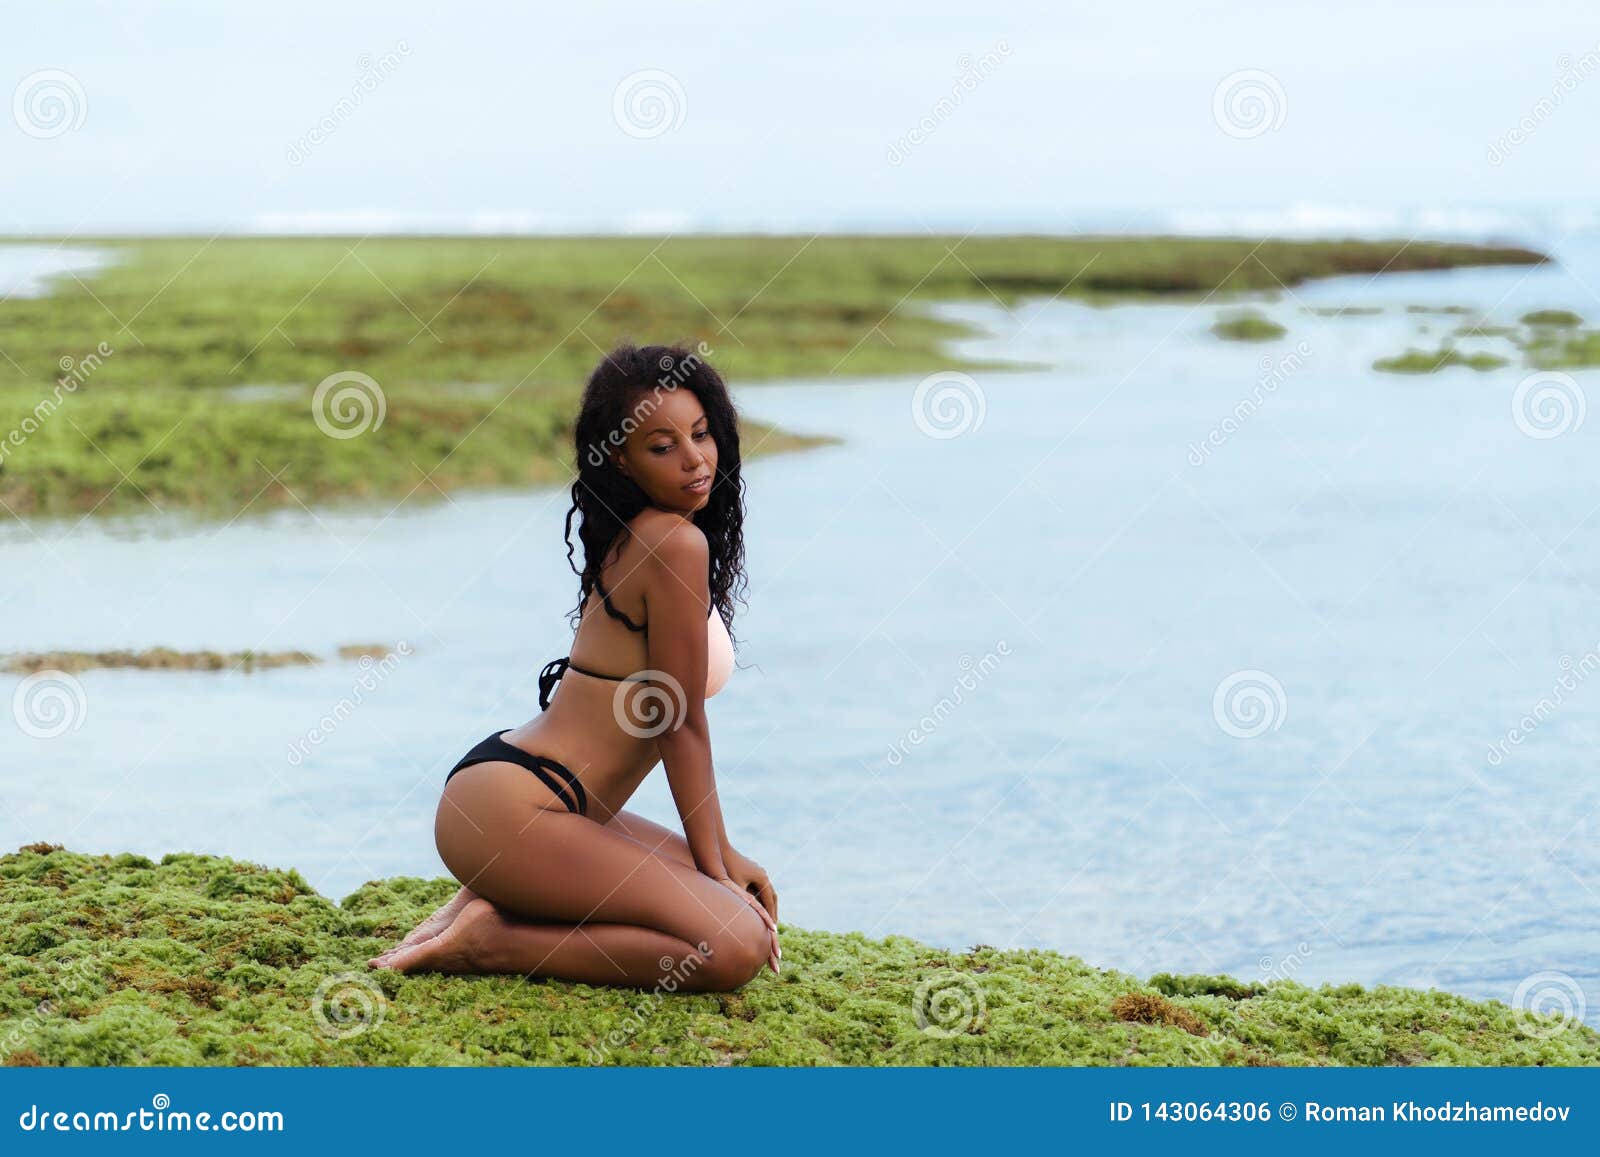 celeste tyler add photo hot african american girls